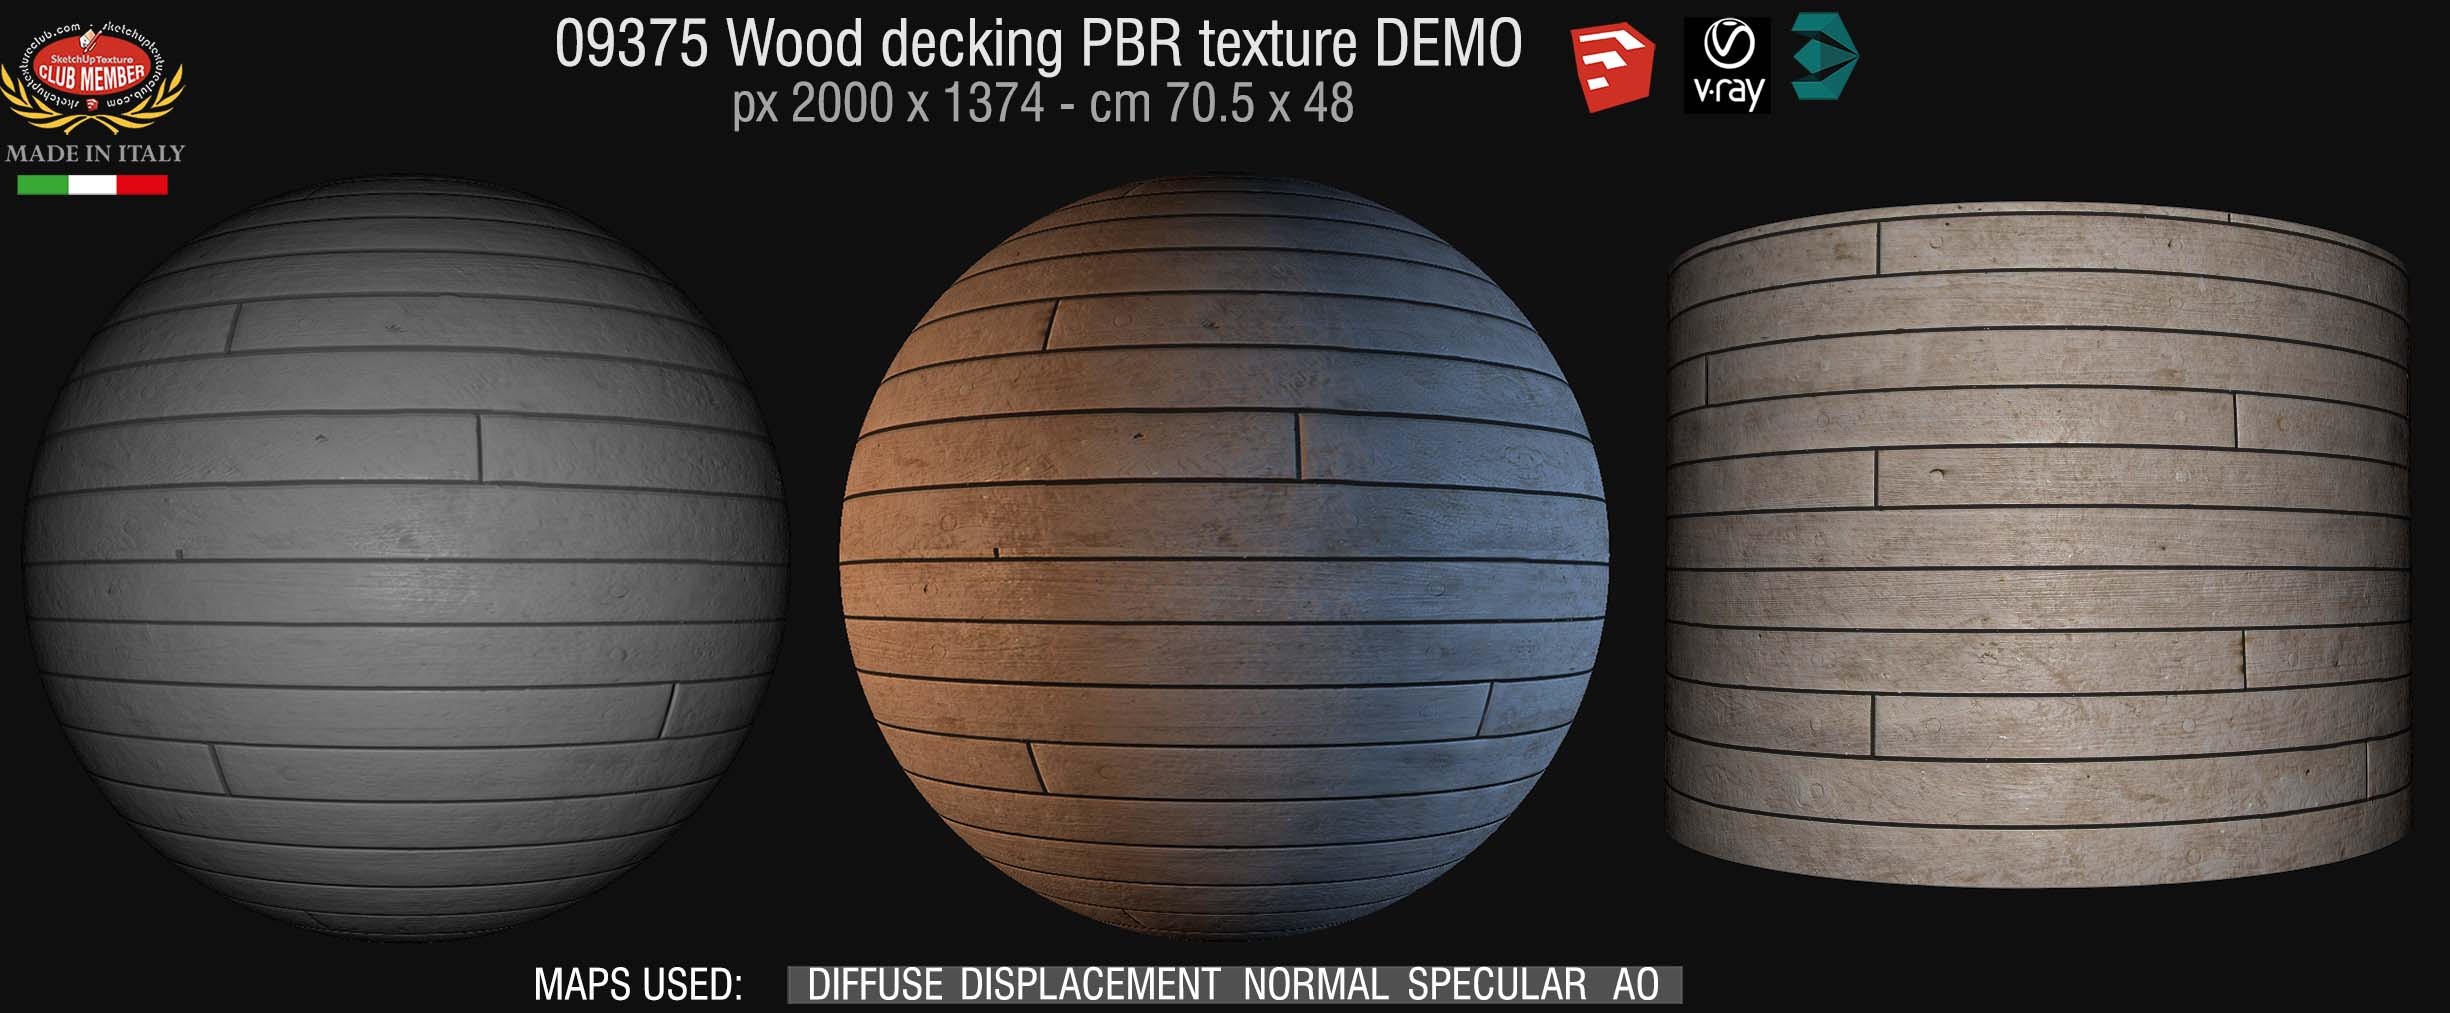 09375 Wood decking PBR texture seamless DEMO